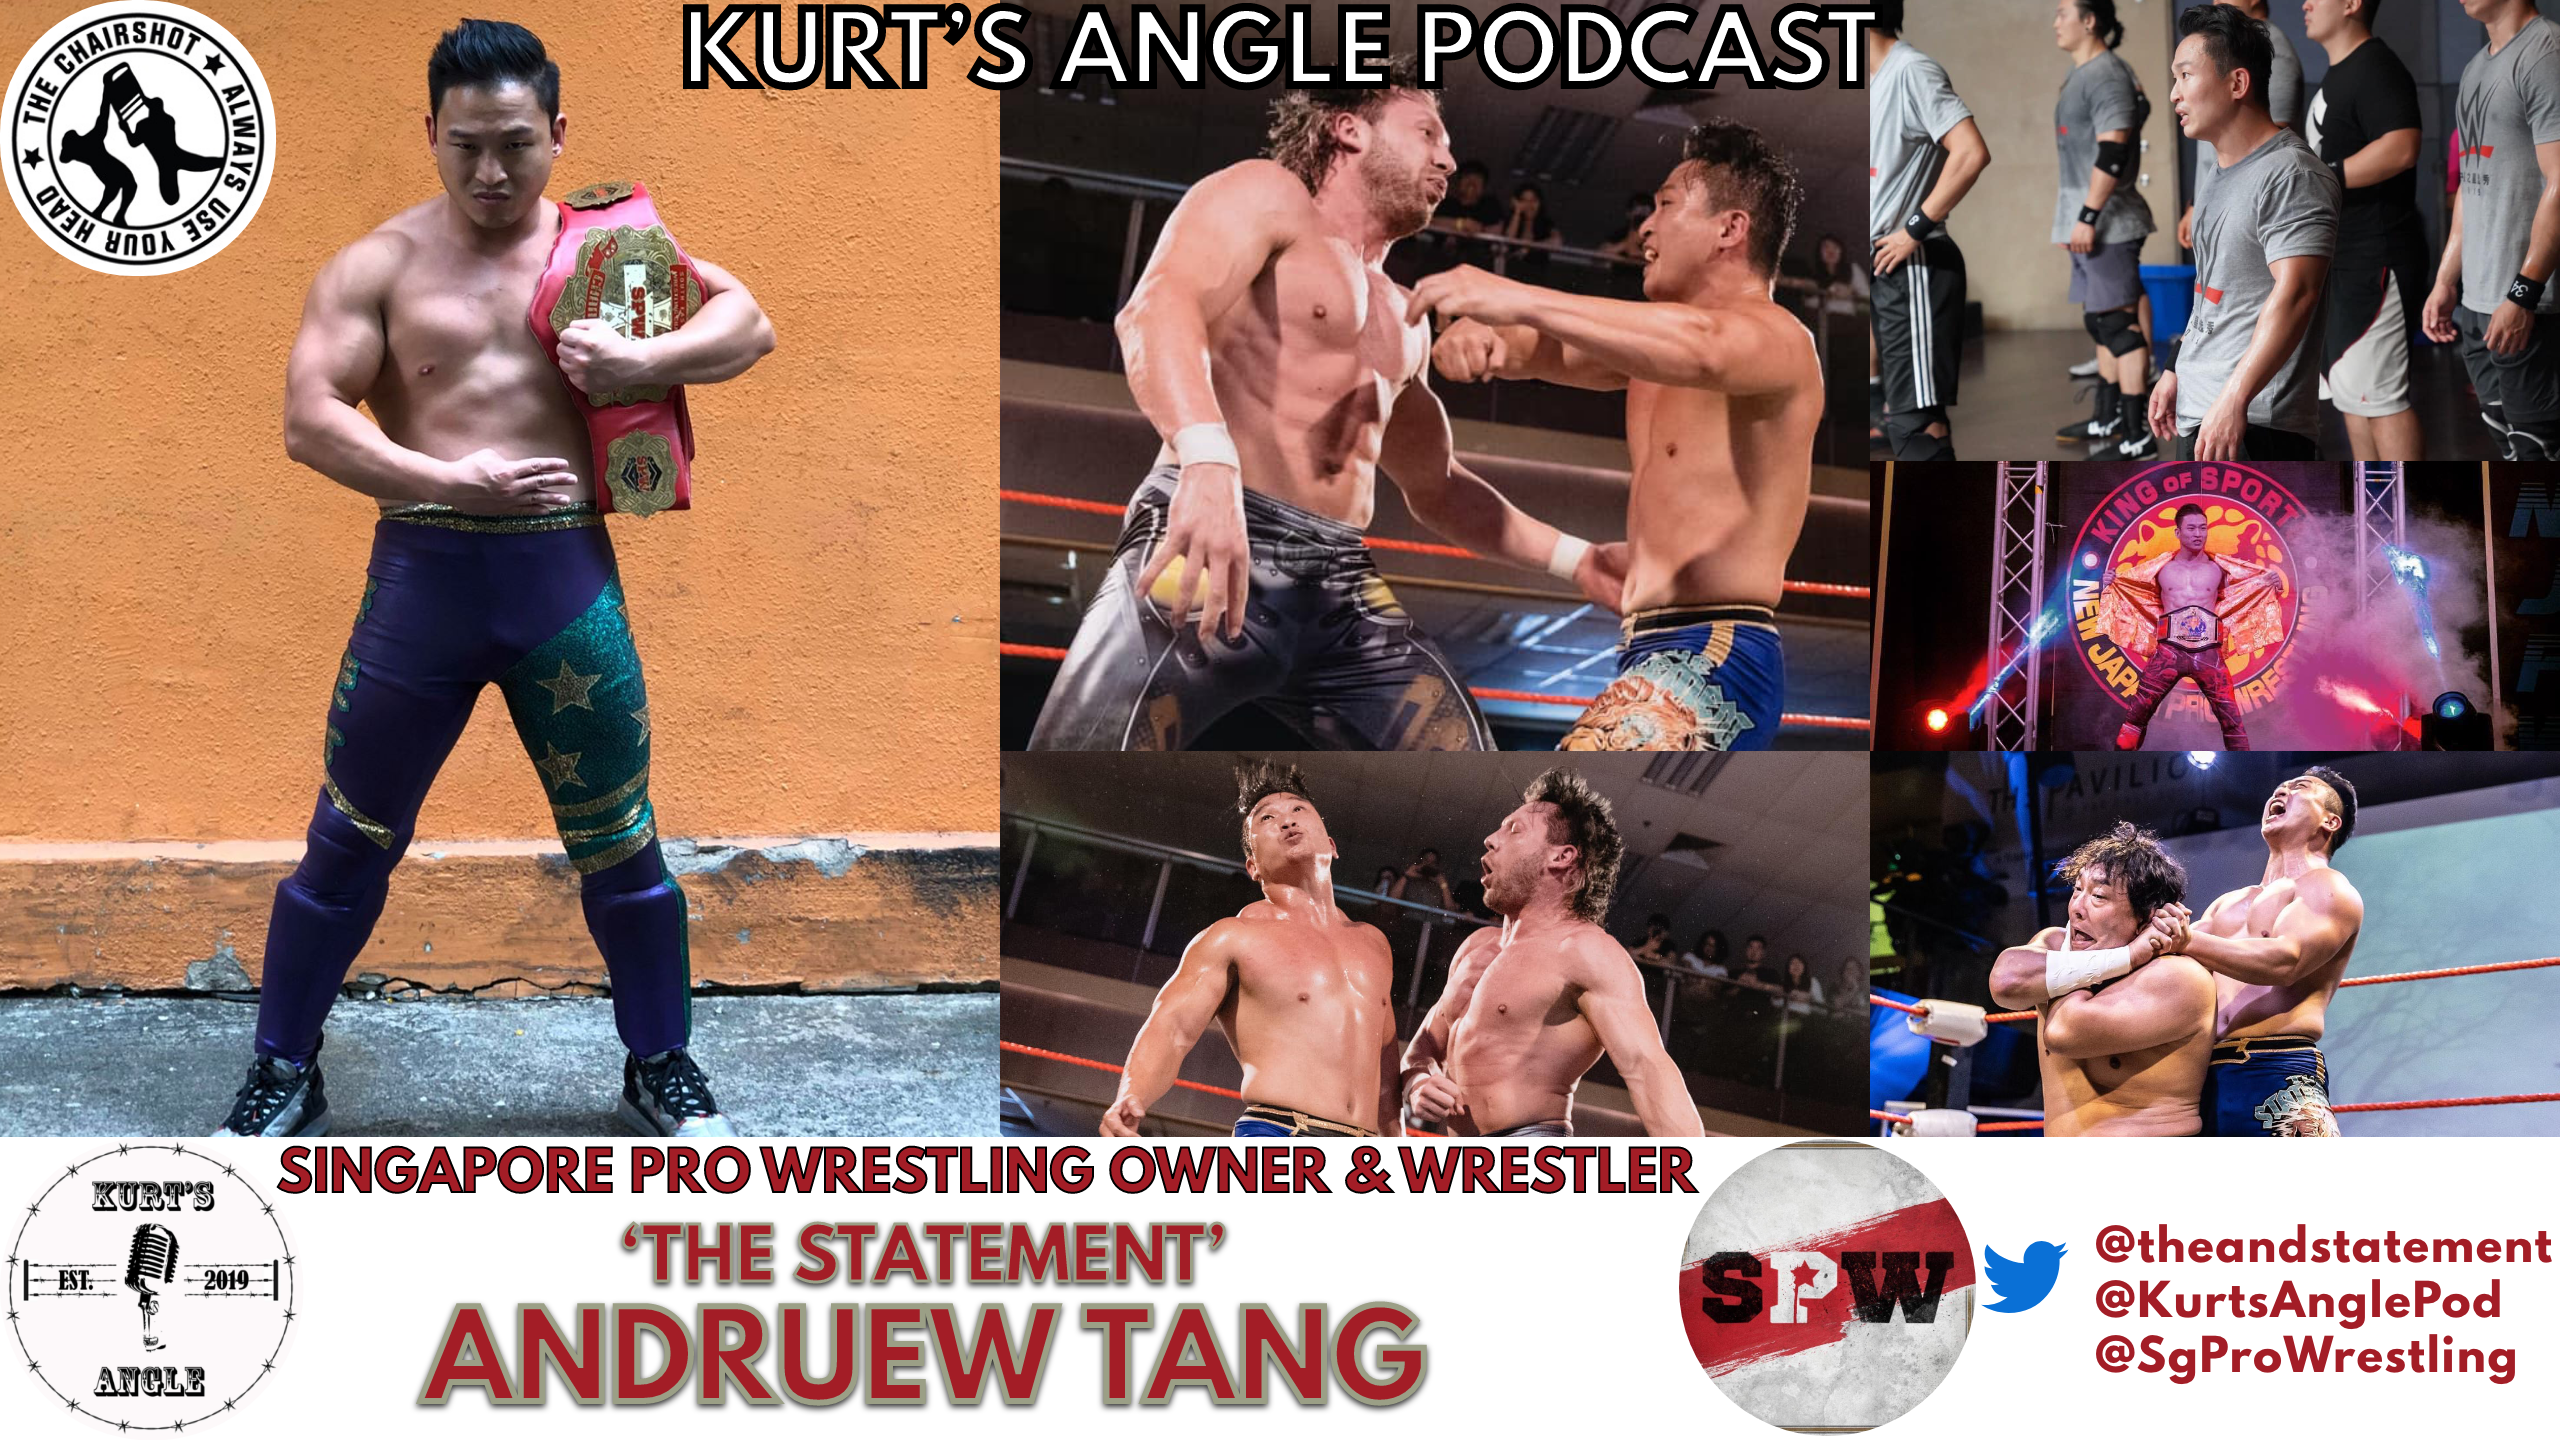 Kurt's Angle Podcast: Andruew Tang (First Singaporean Pro Wrestler